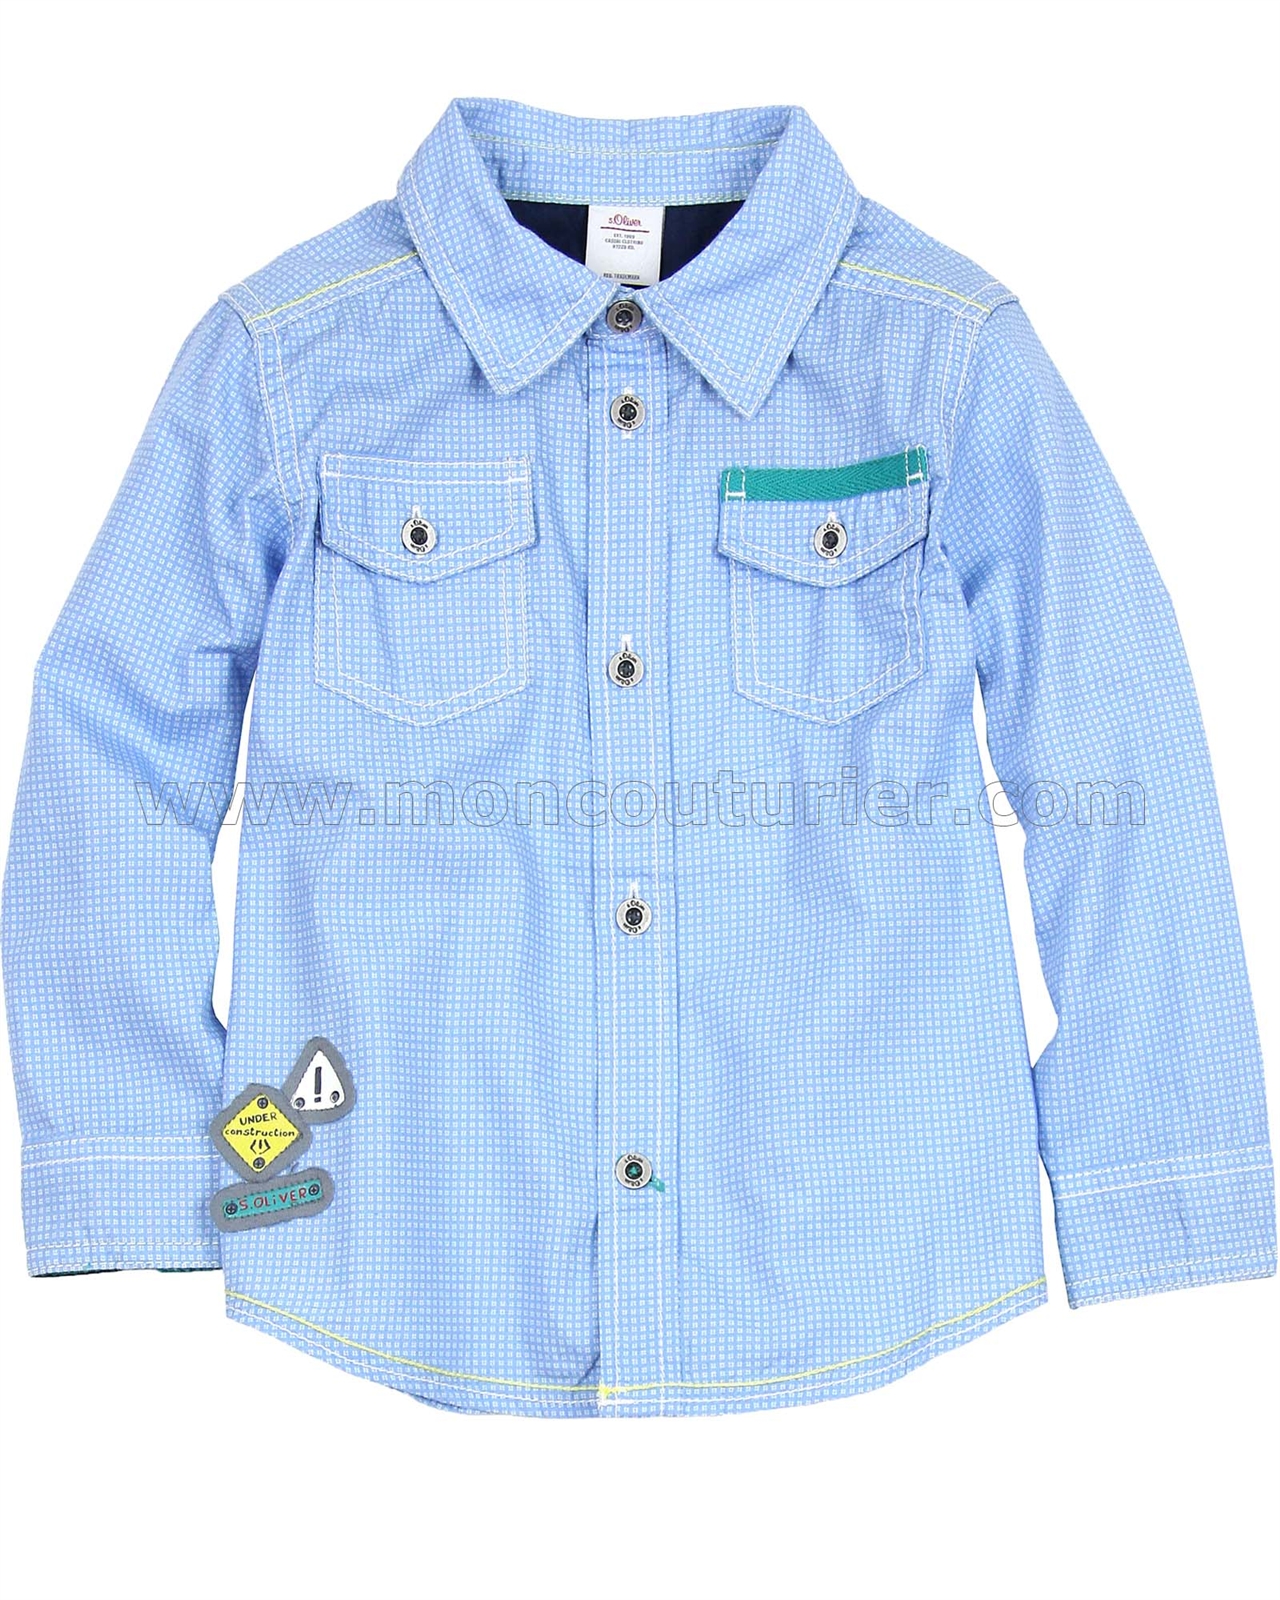 s.Oliver Baby Boys Shirt 